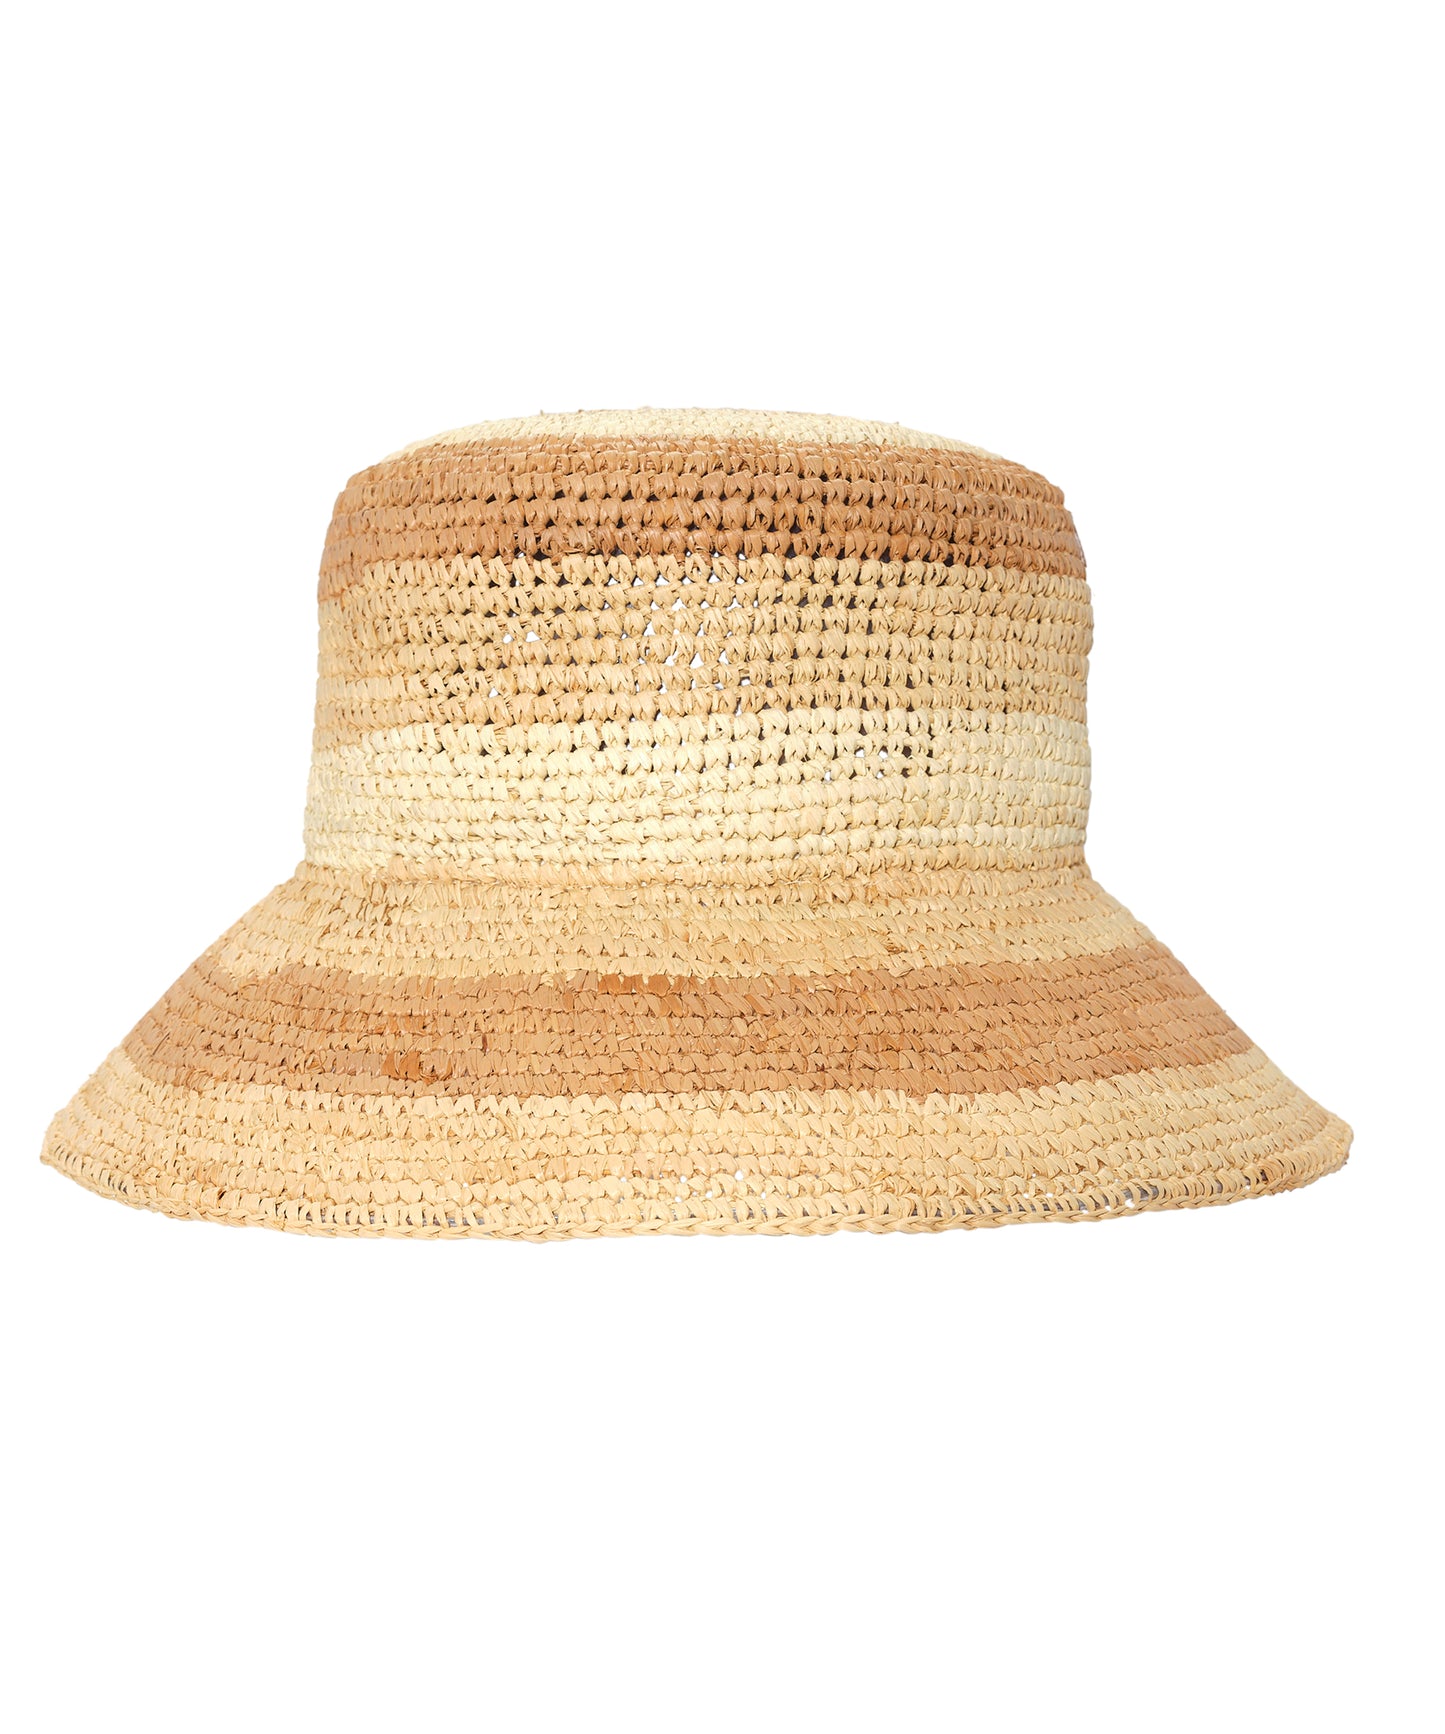 Tropic Stripe Hat in color White/Sand